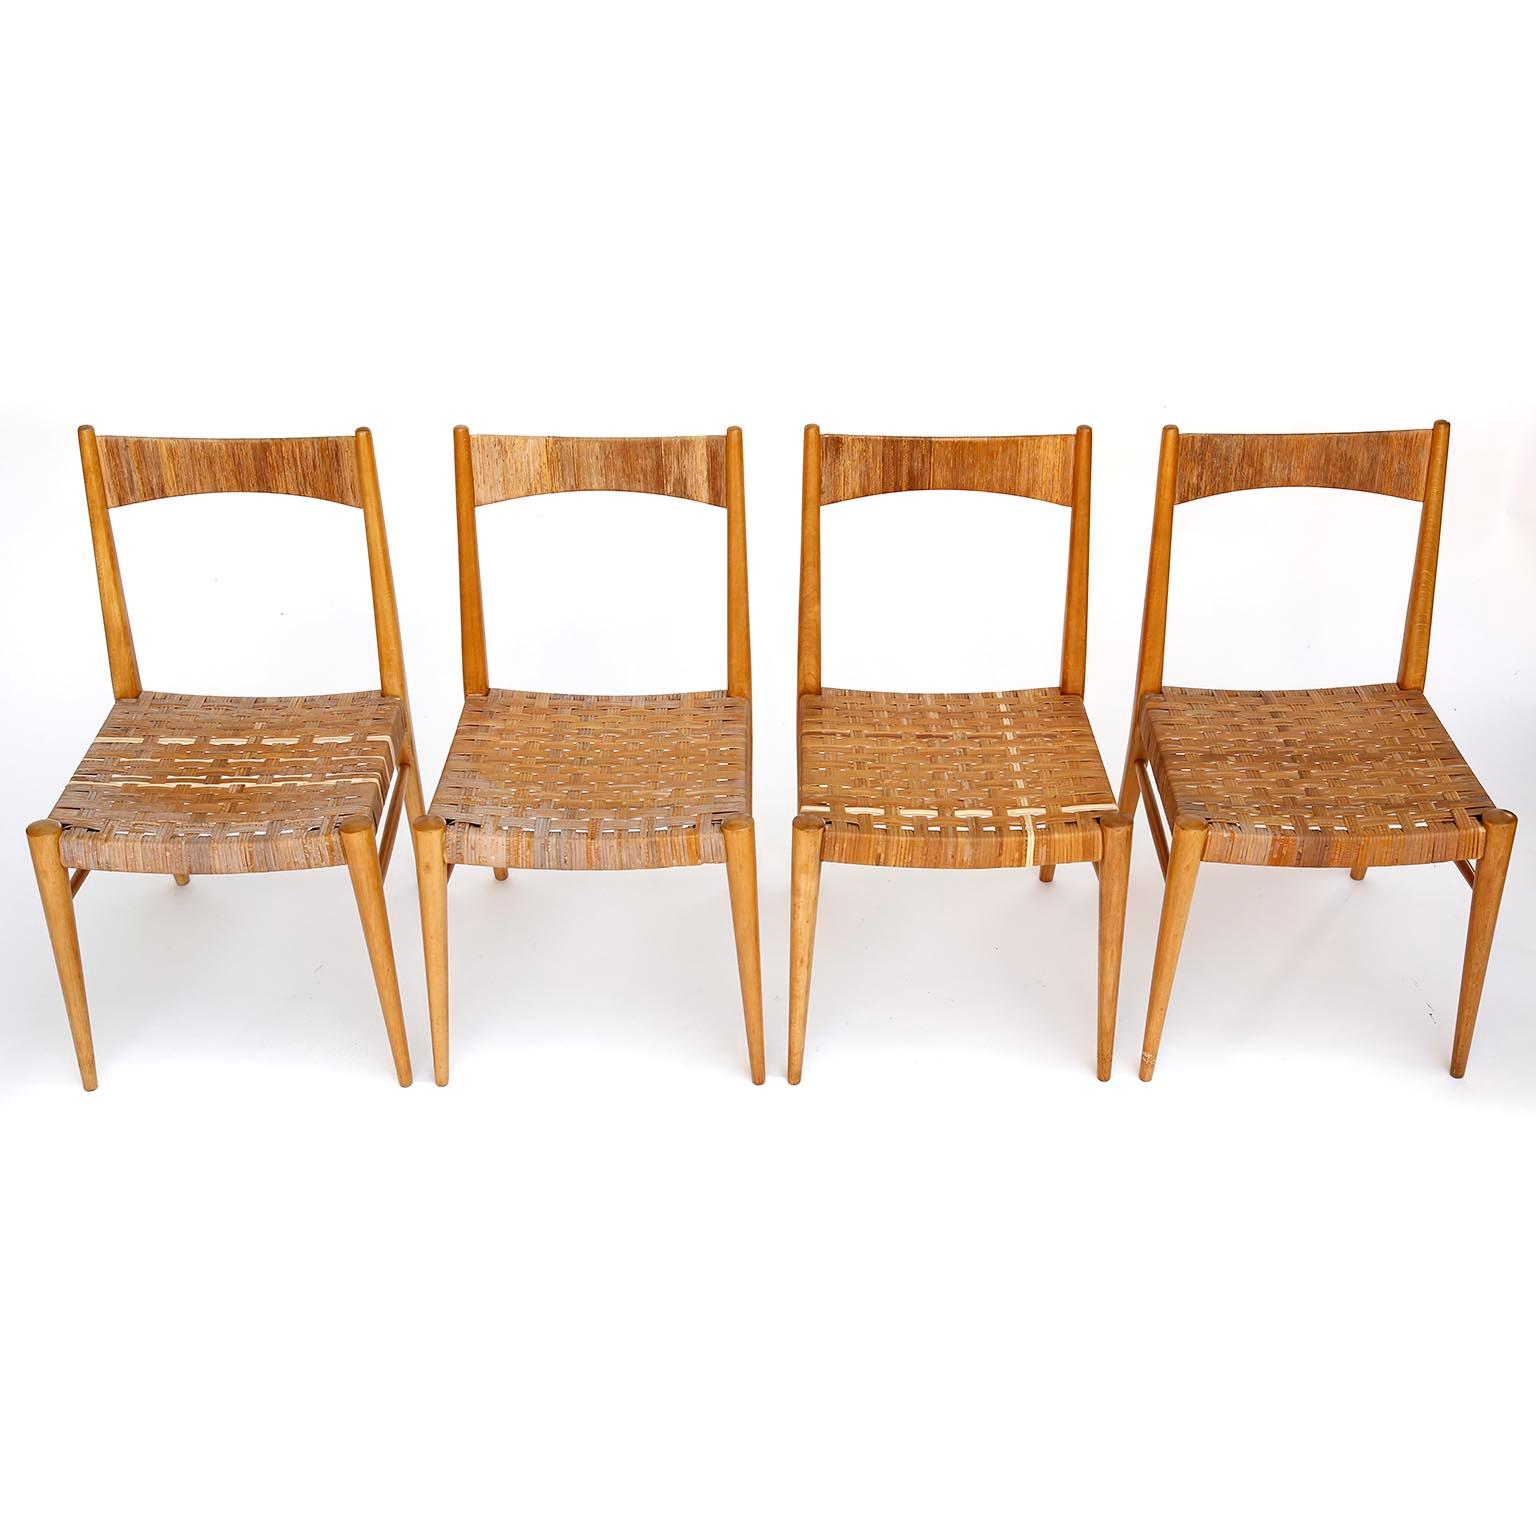 Four Anna-Lülja Praun Chairs, Wood Wicker Cane, 1950s For Sale 7